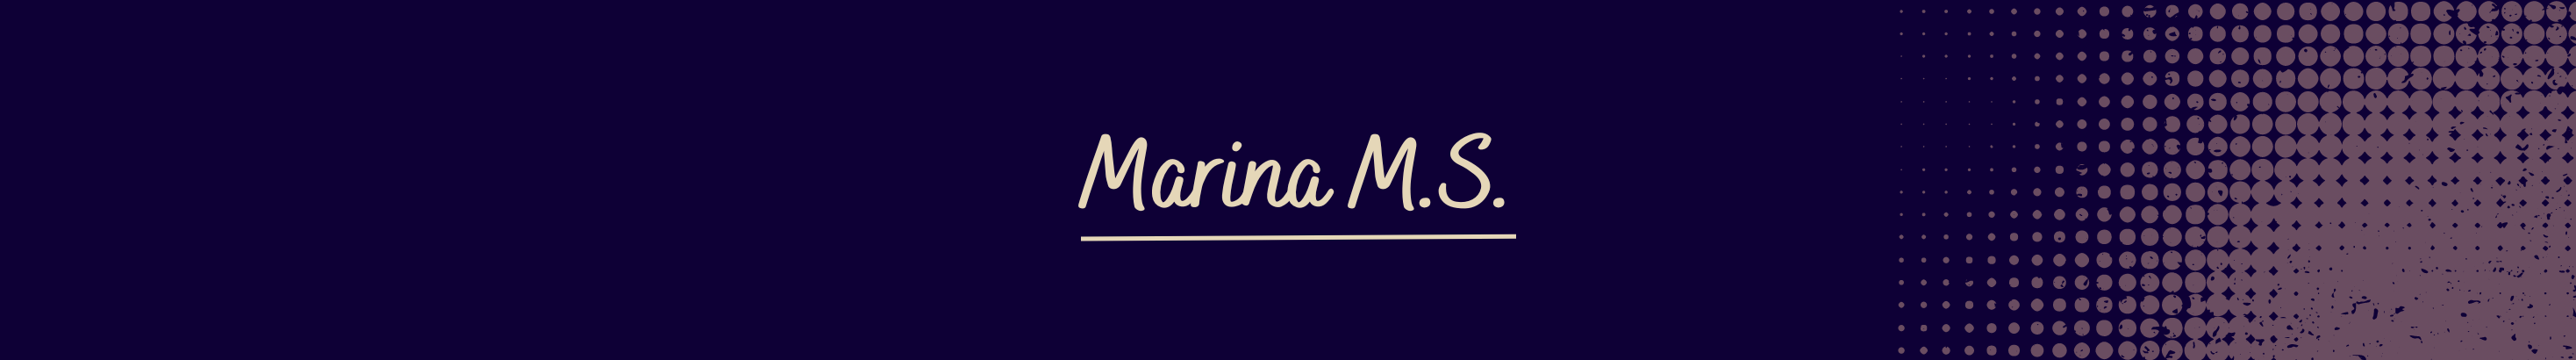 Marina MdS's profile banner